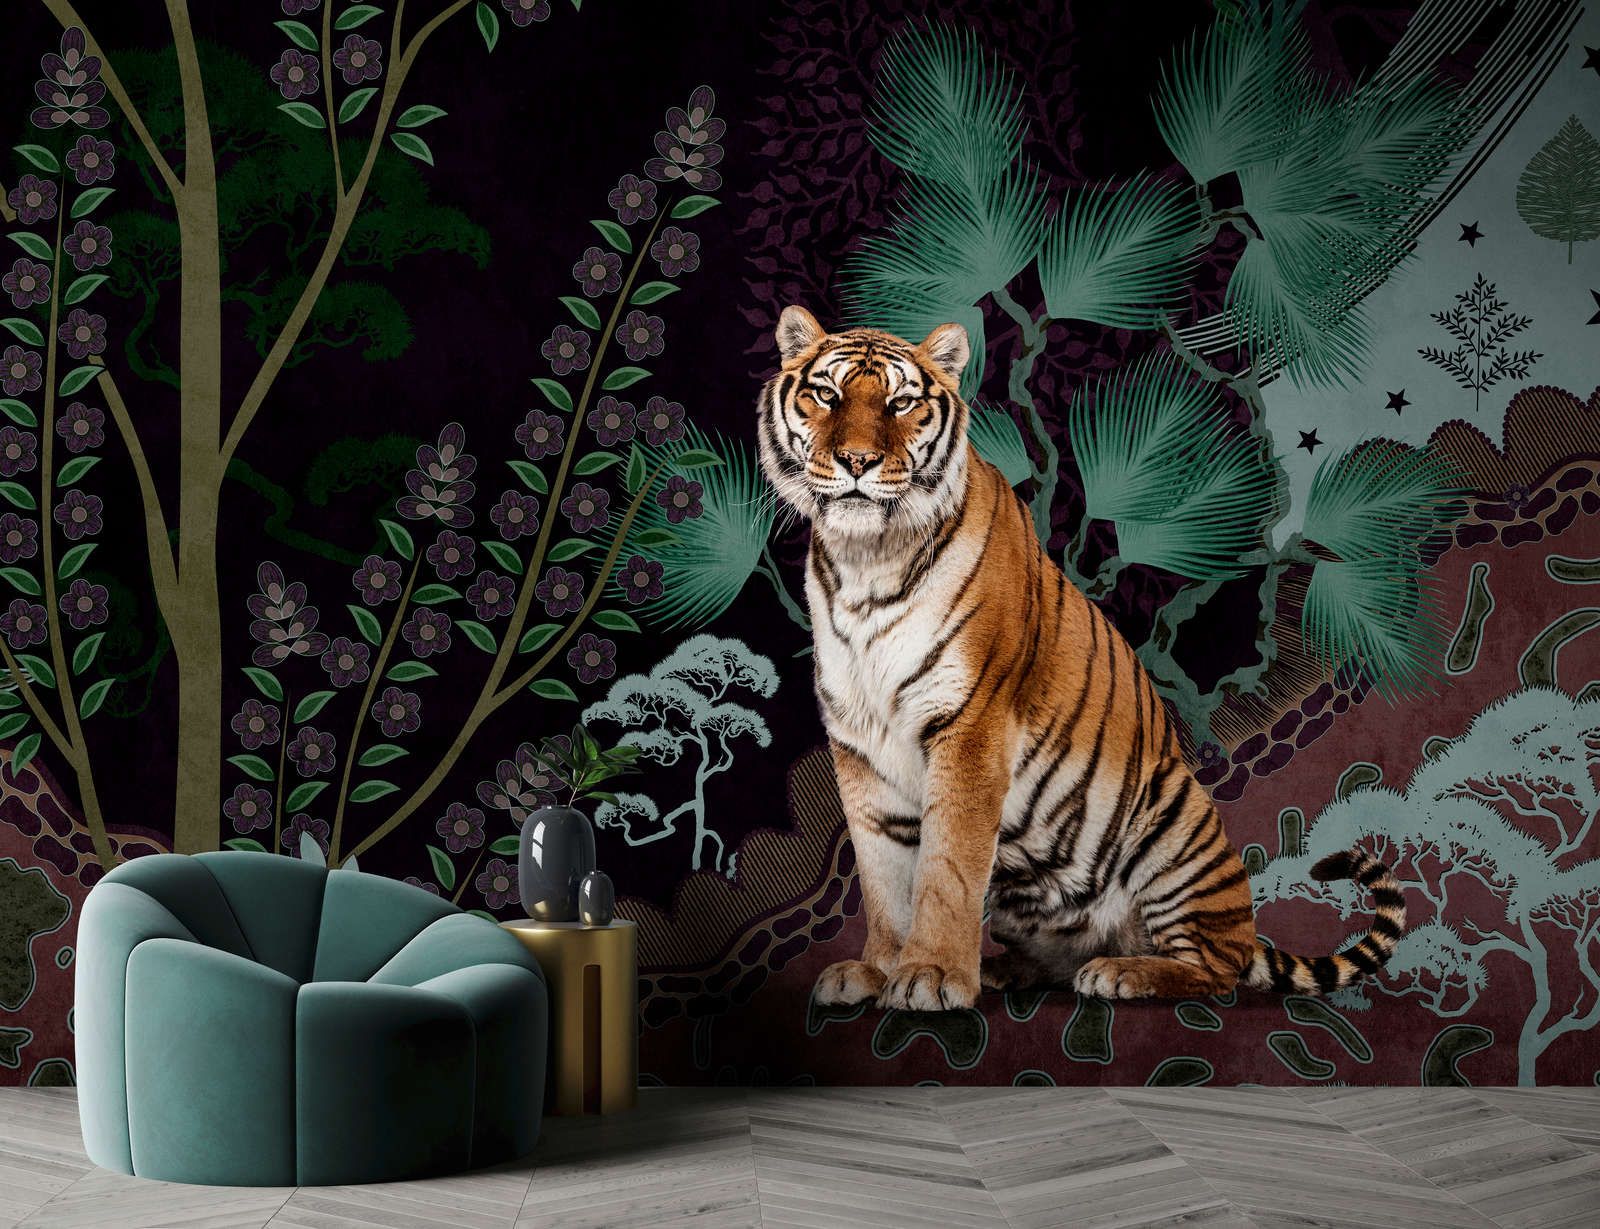             Fototapete »khan« - Abstraktes Jungle-Motiv mit Tiger – Glattes, leicht perlmutt-schimmerndes Vlies
        